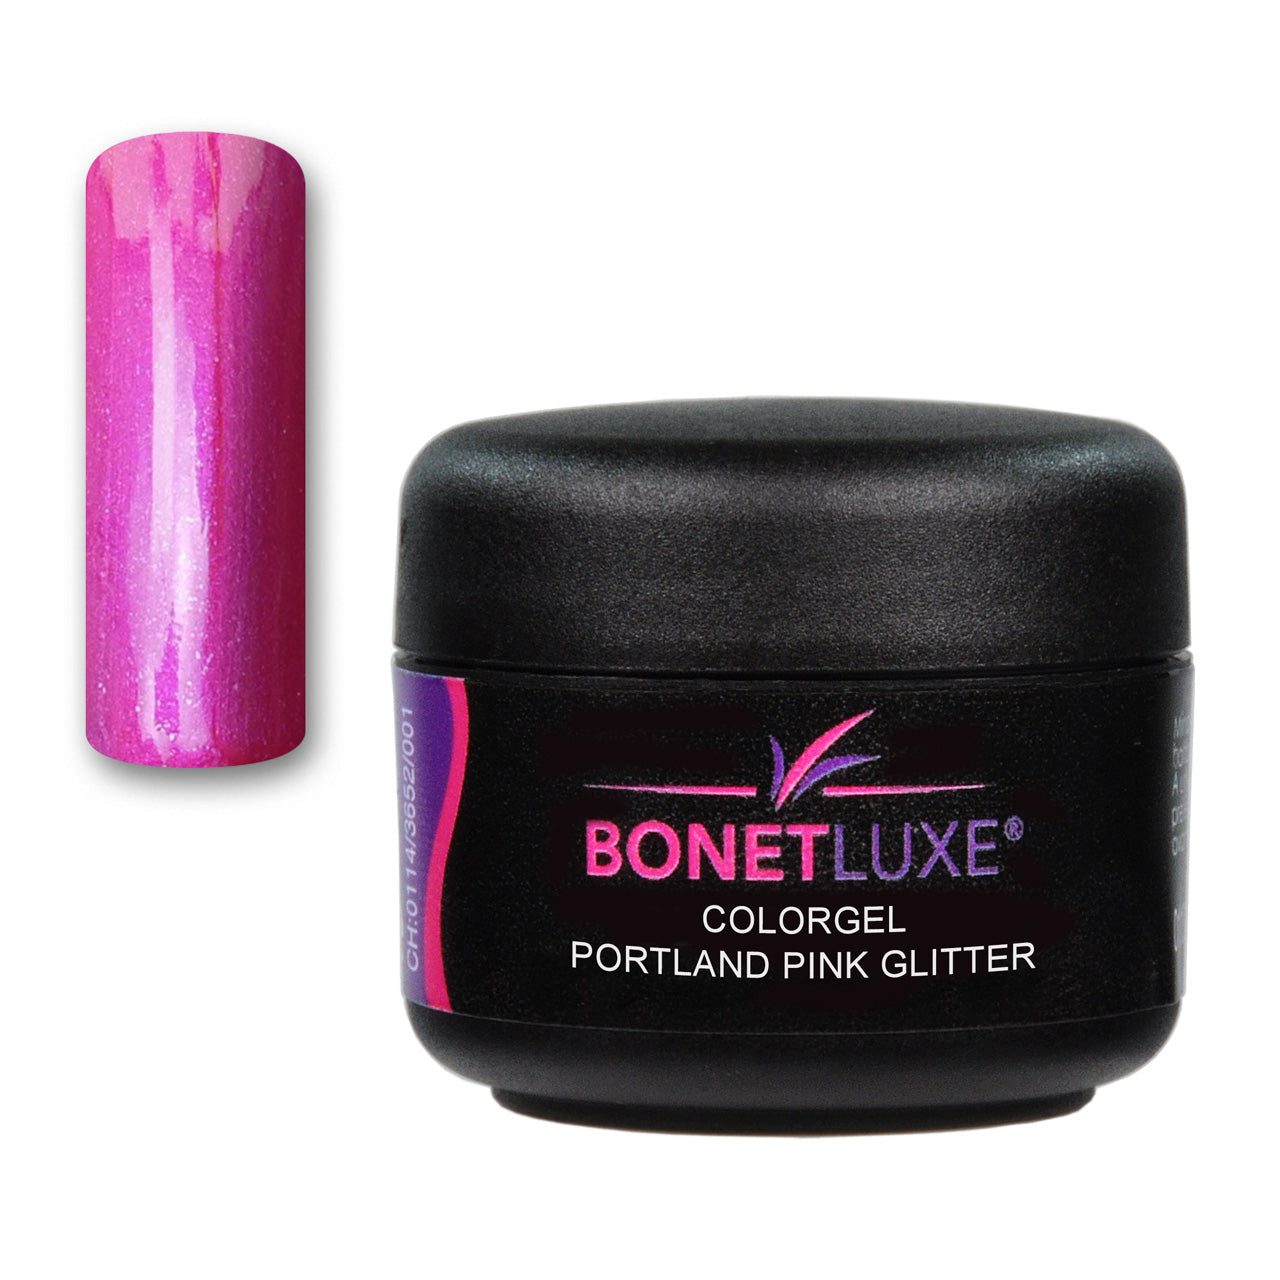 Bonetluxe Colorgel Portland Pink Glitter